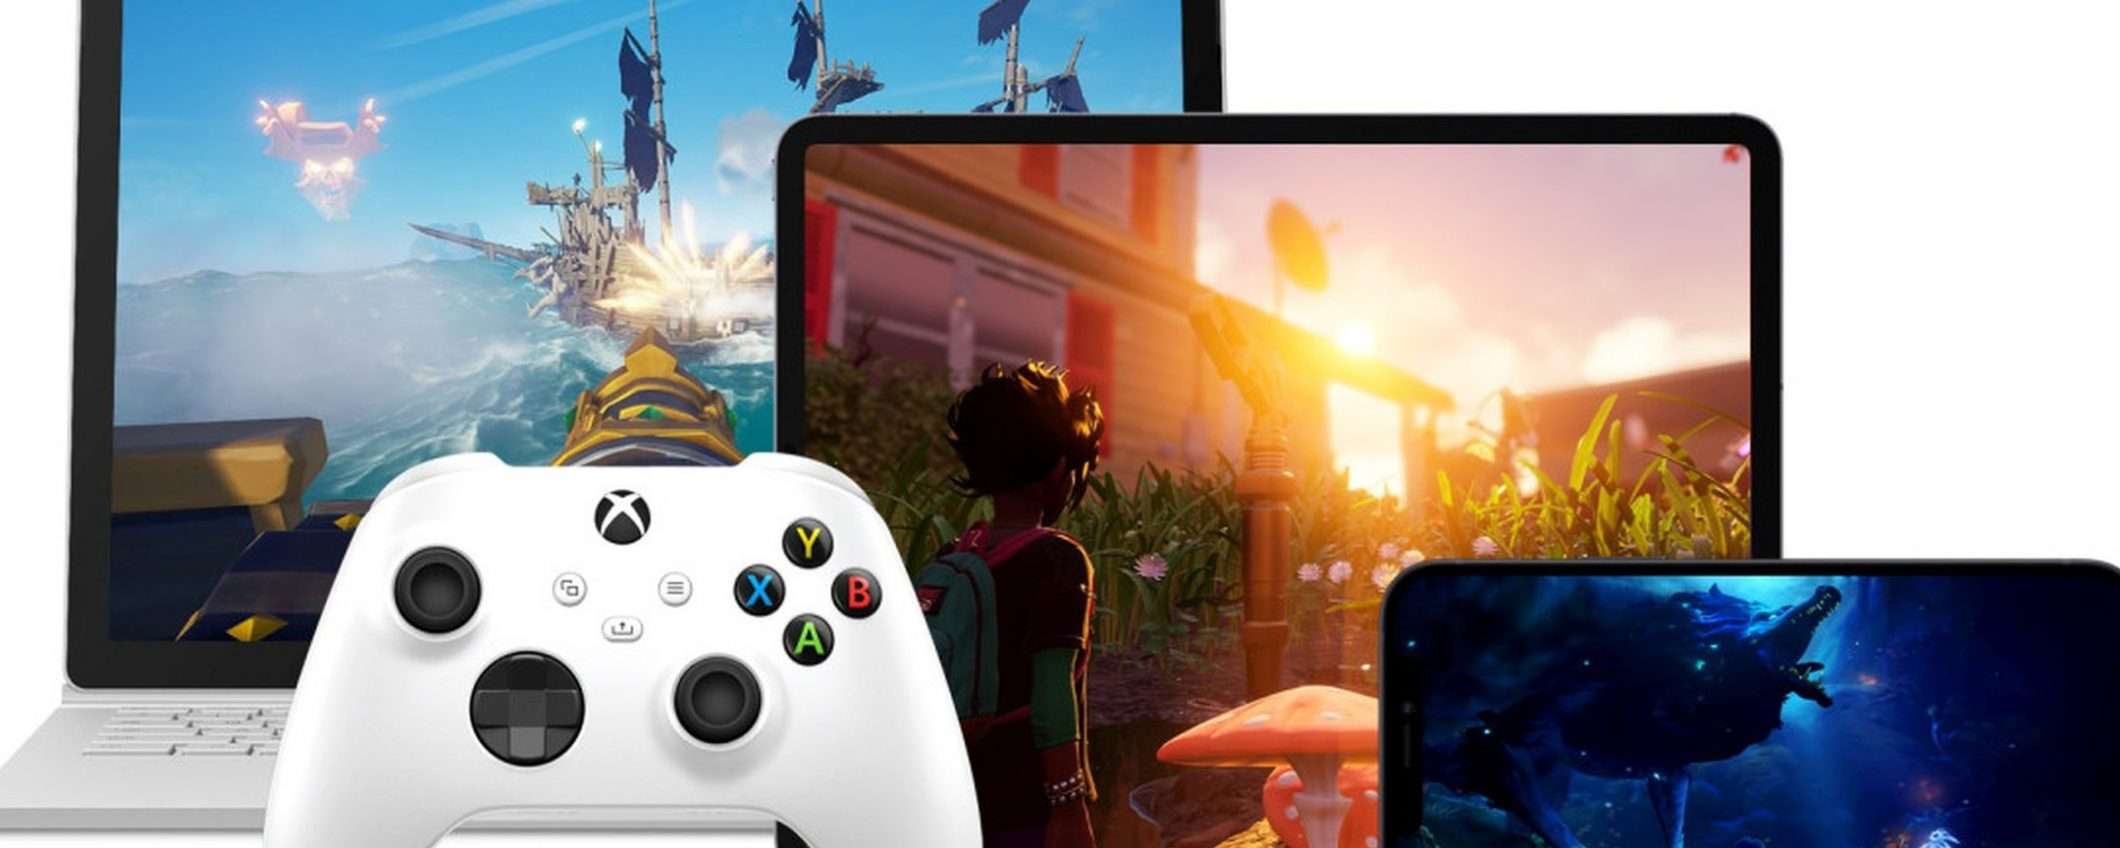 Xbox Cloud Gaming disponibile su Windows 10 e iOS